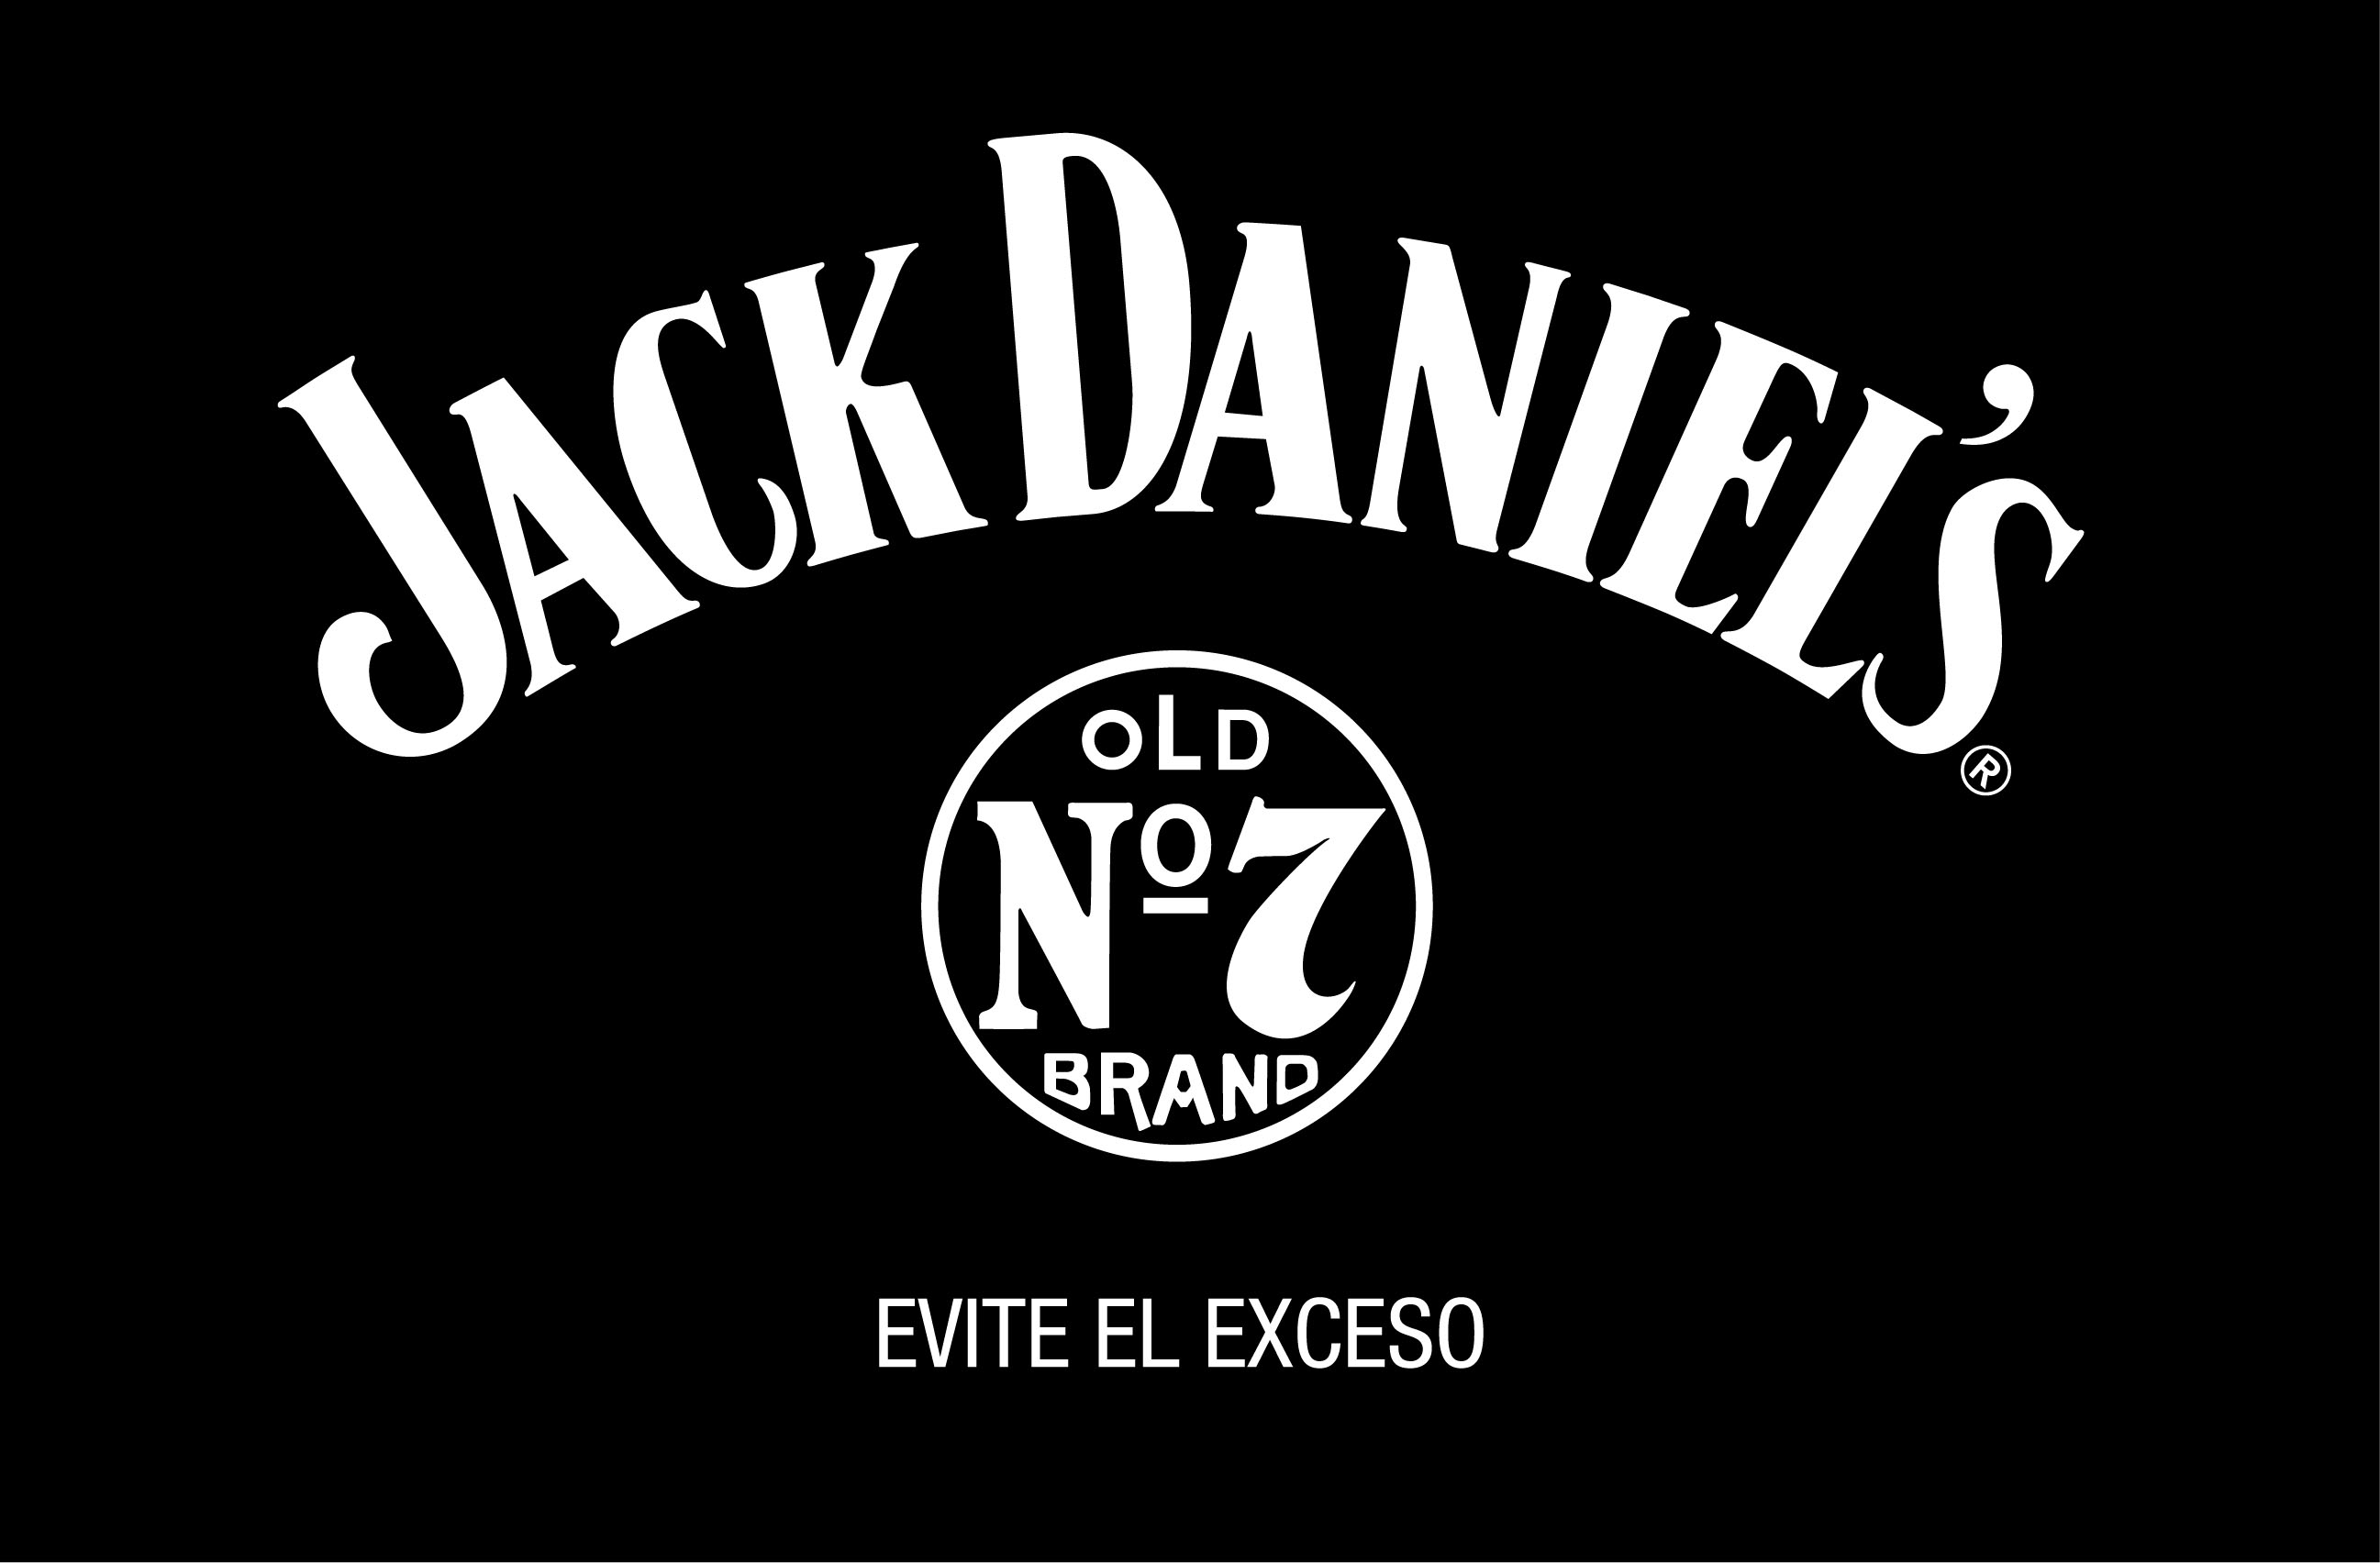 Jack daniels logo Wallpaper